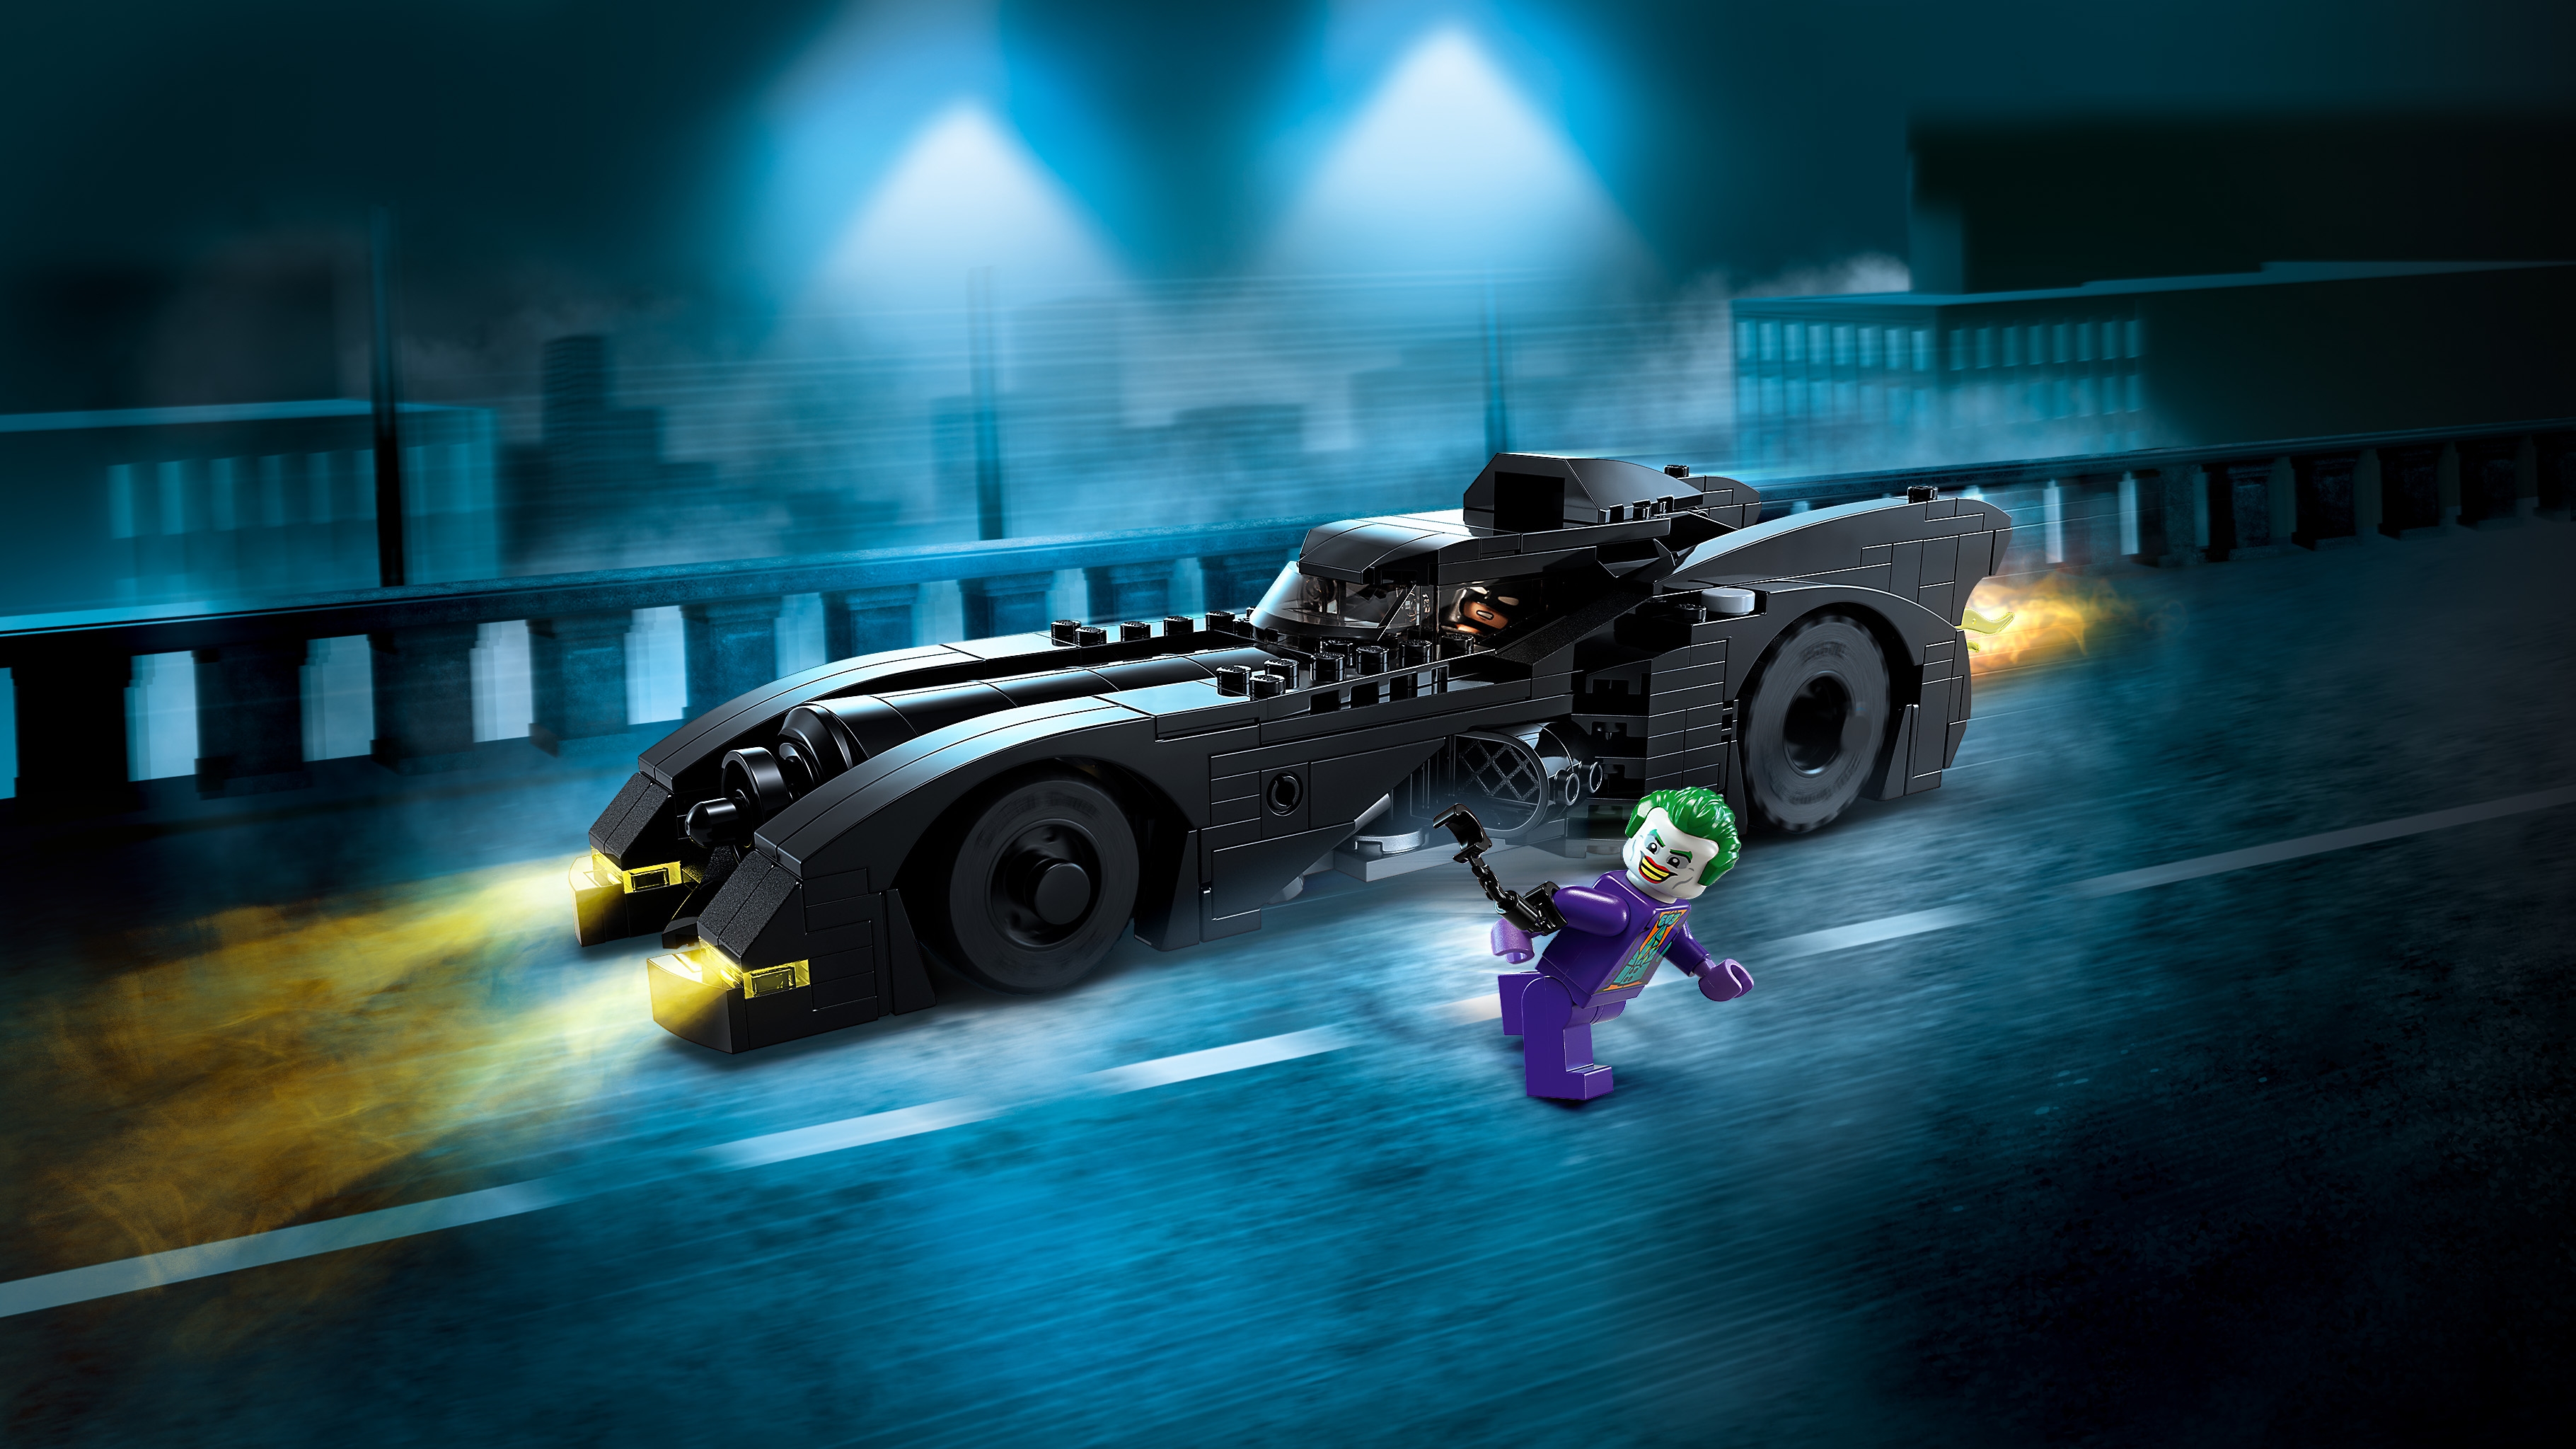 Cool Stuff: The Batman LEGO Sets Let You Build The New Batmobile, Batcycle,  And Batcave